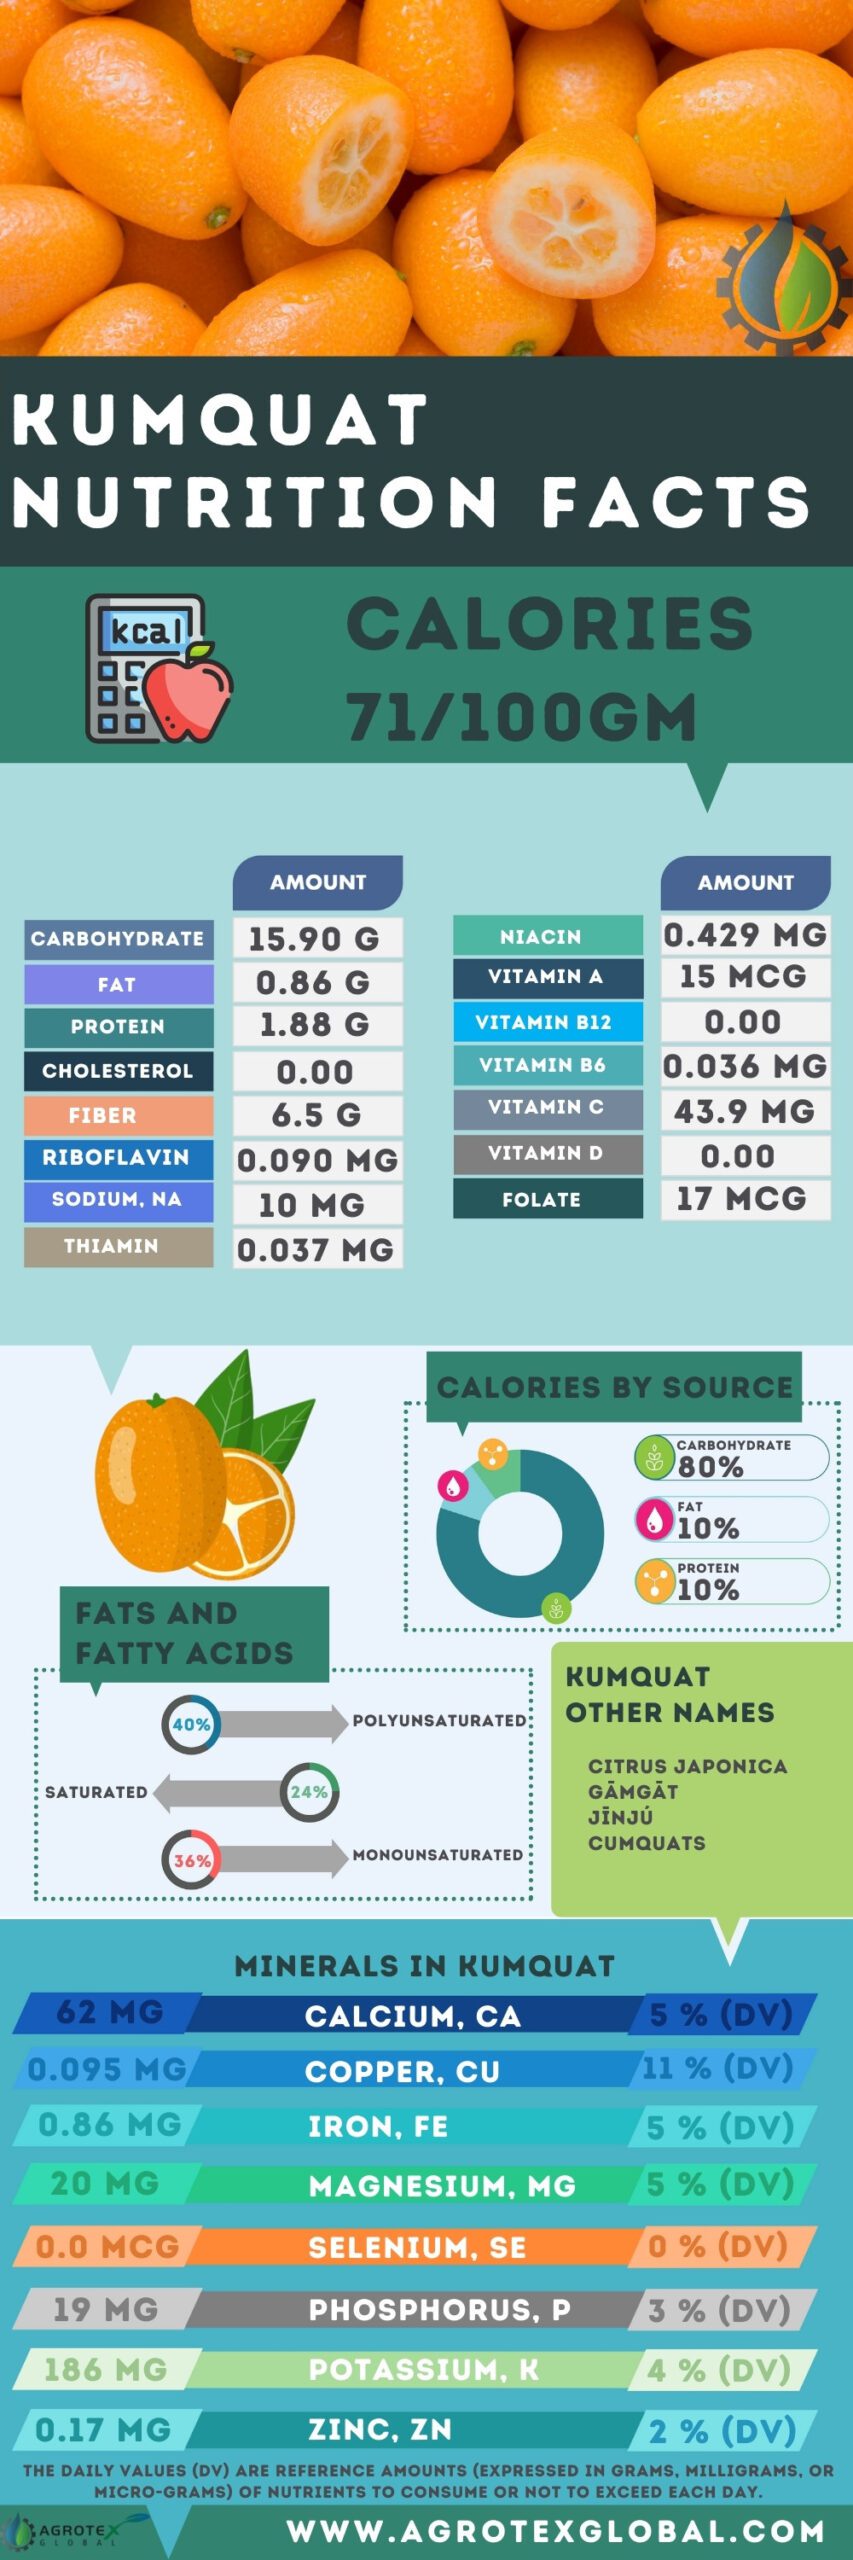 Kumquat NUTRITION FACTS calorie chart infographic